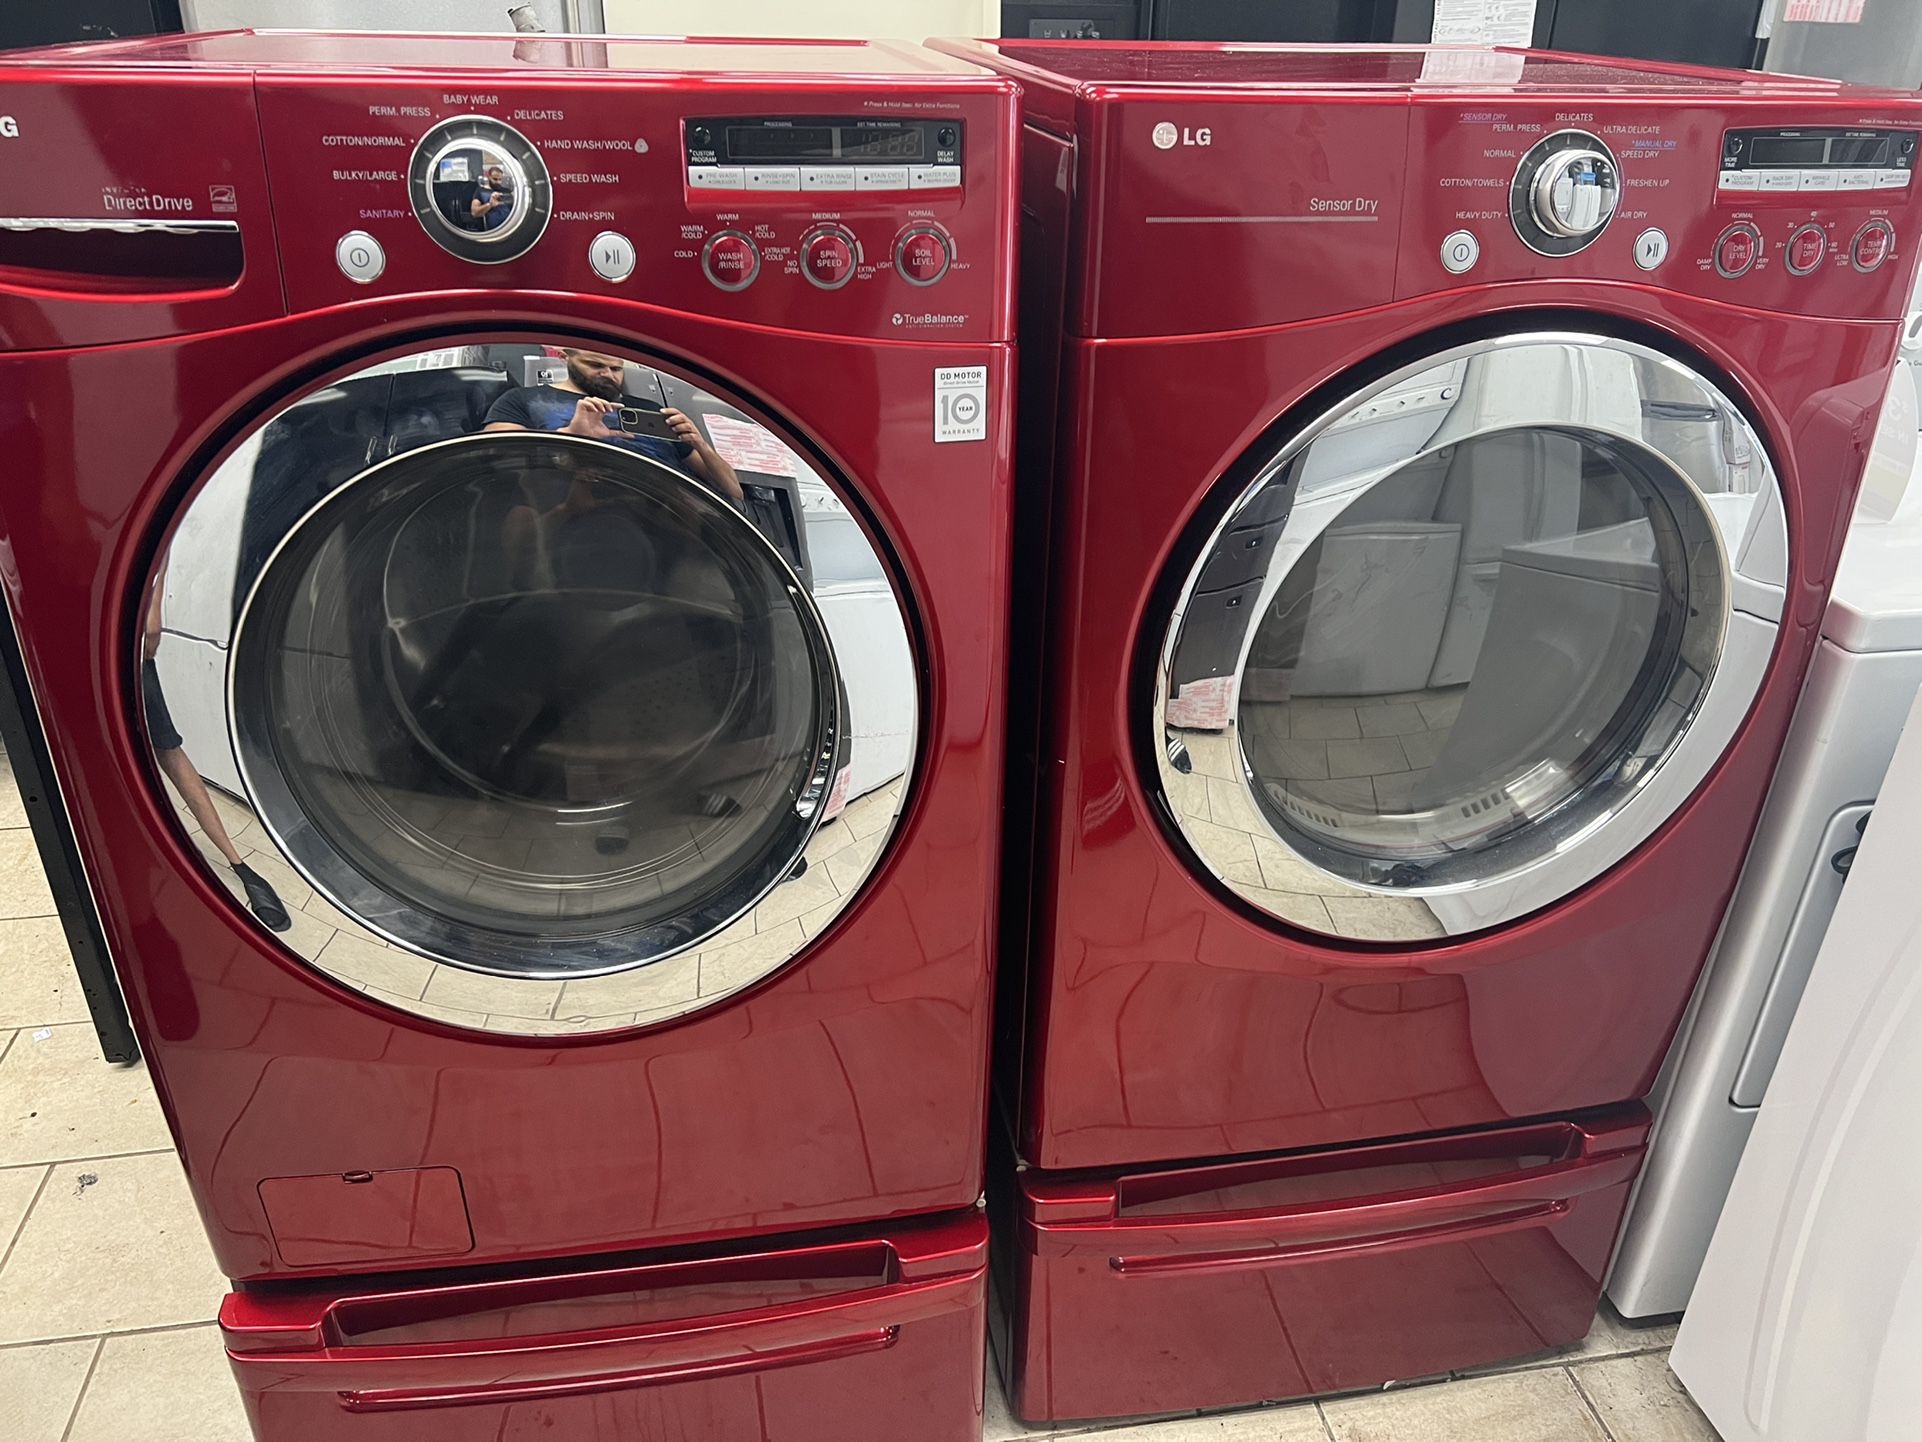 Red Washer Dryer Set